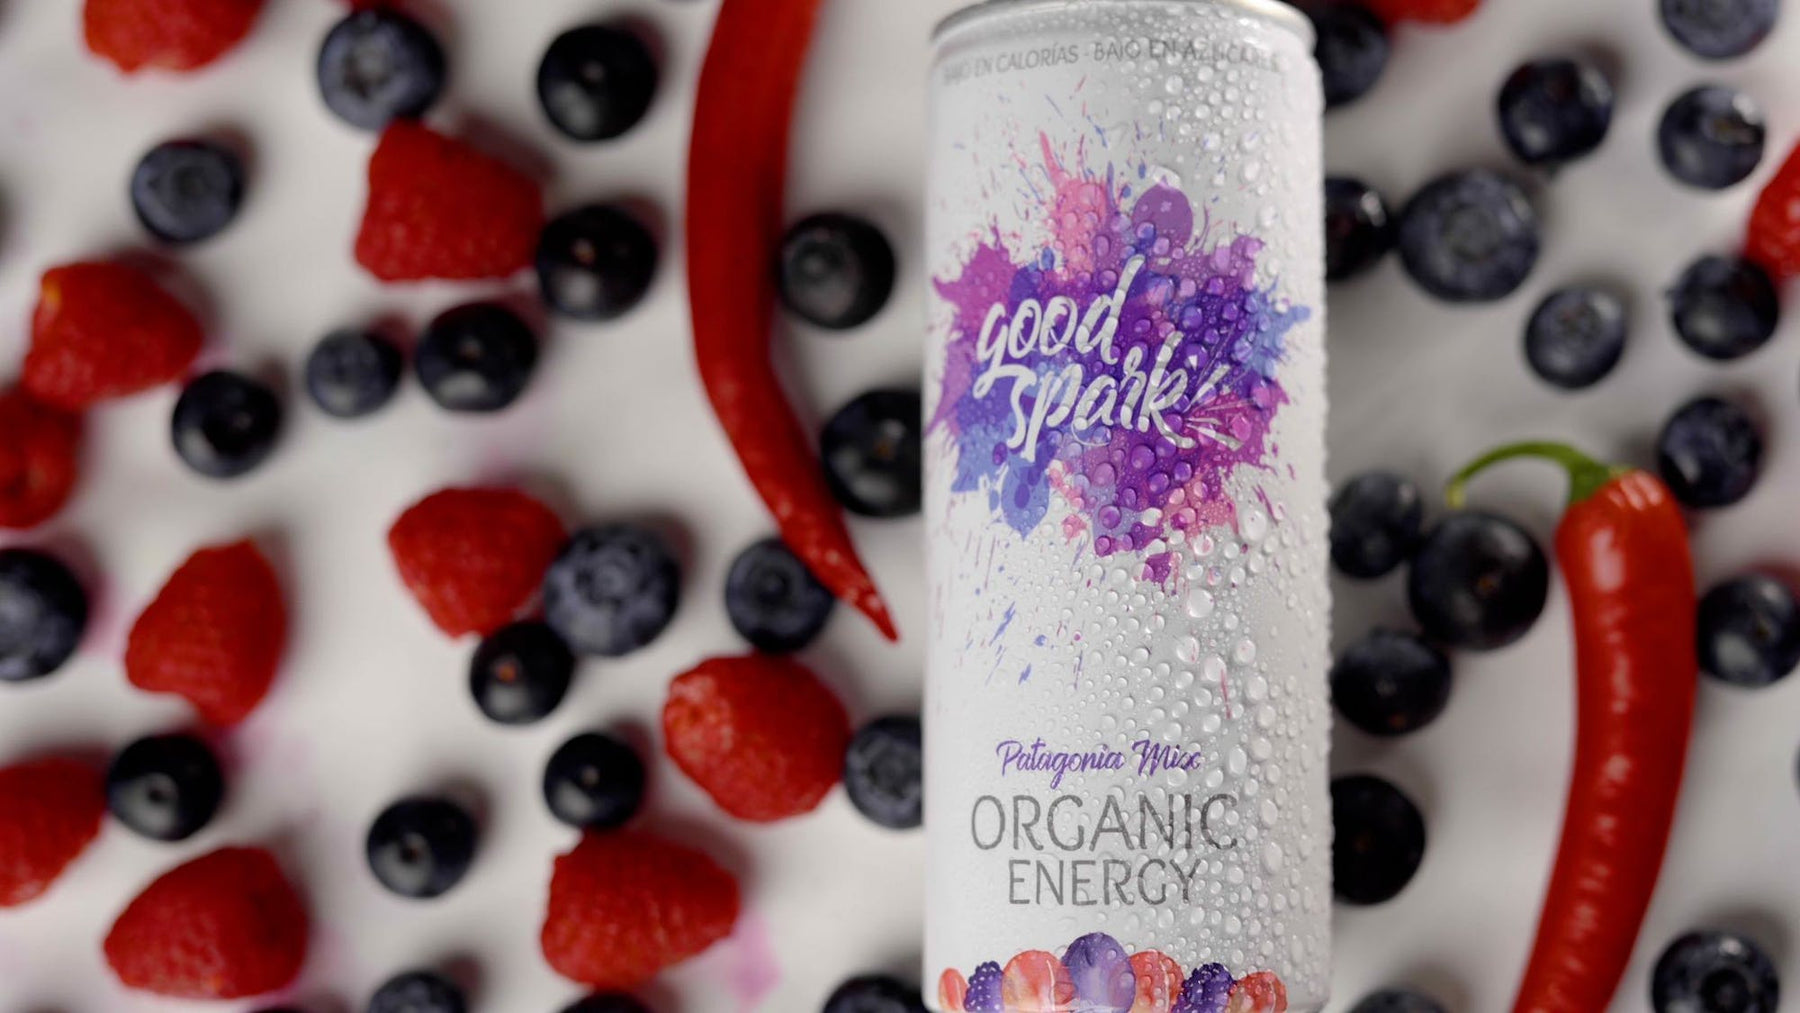 Organic energy drink Good Spark Patagonia Mix